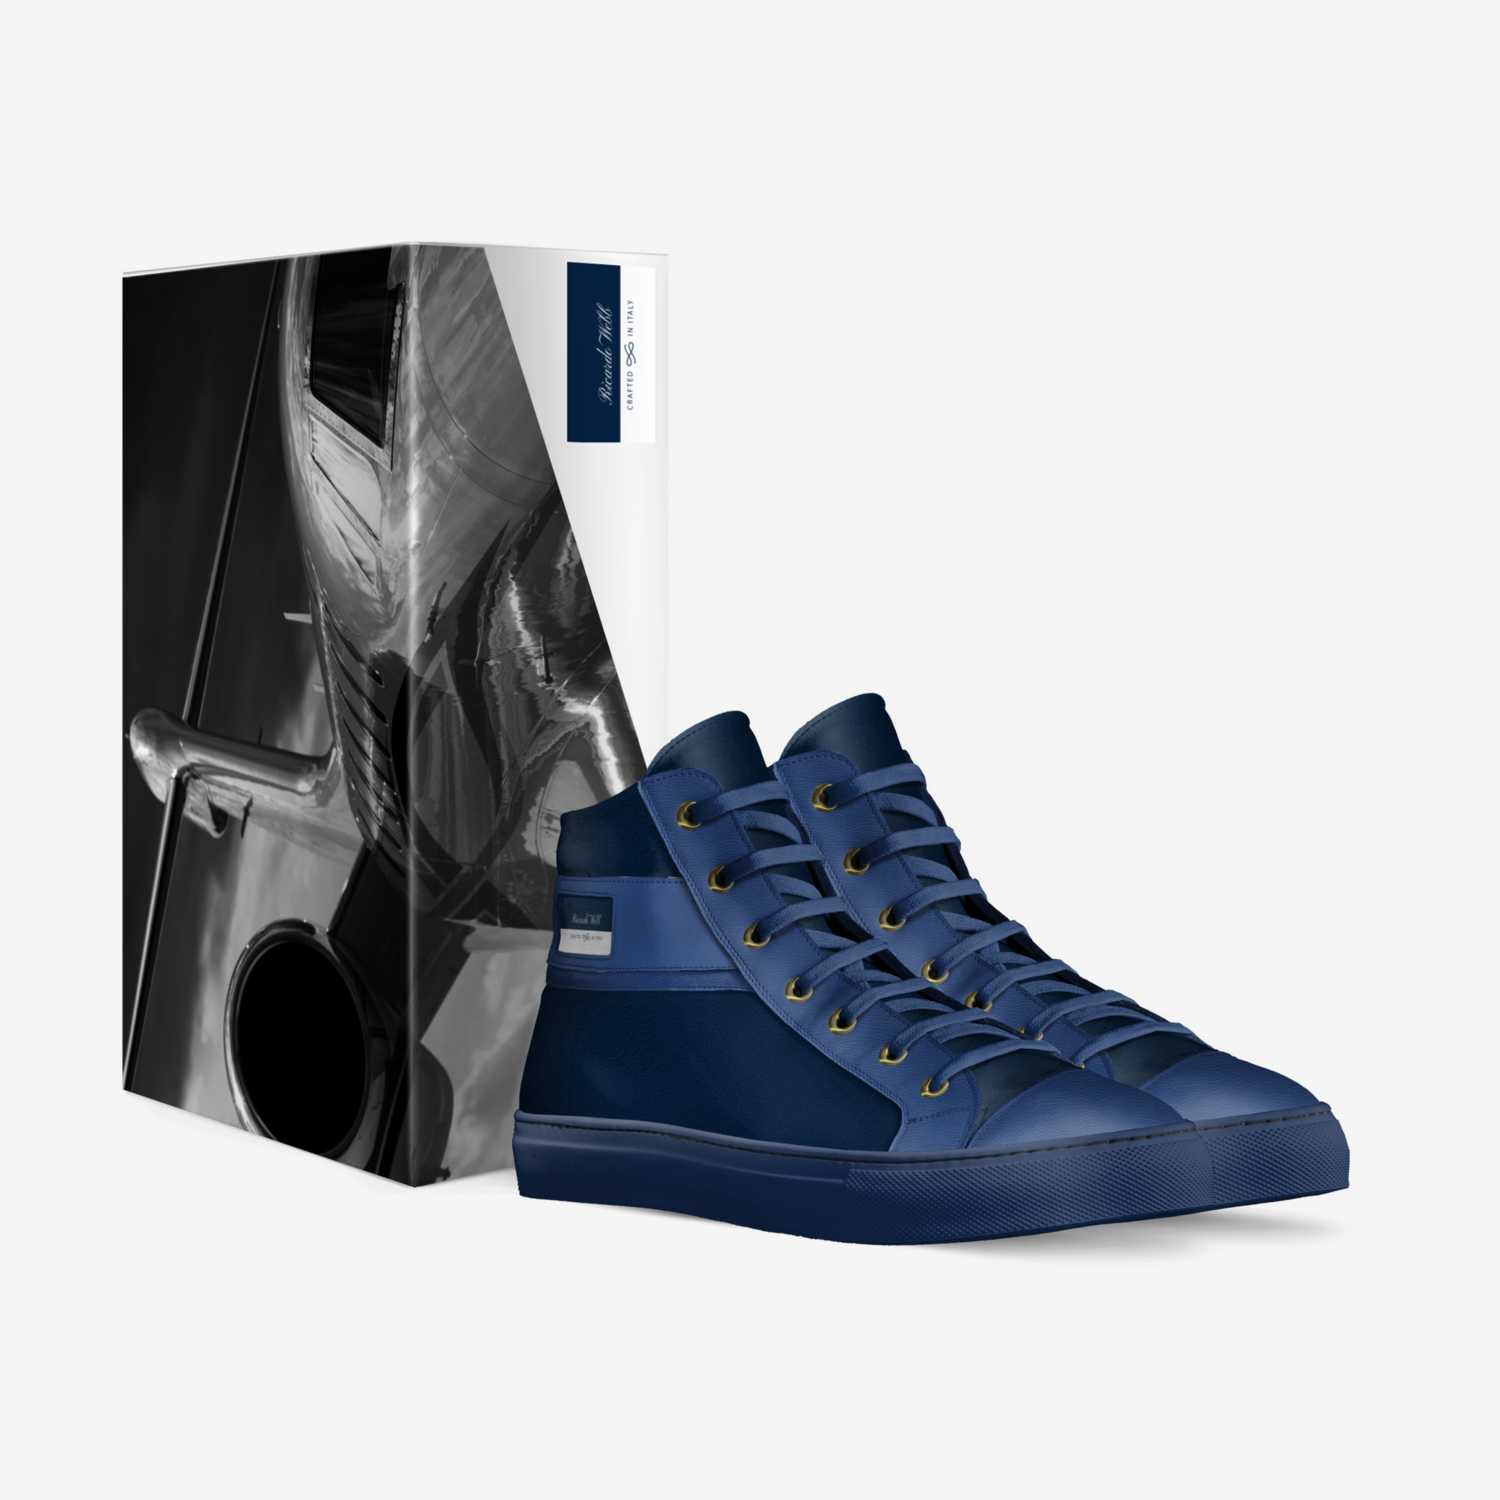 Ricardo Leonie  custom made in Italy shoes by Ricardo Webb | Box view